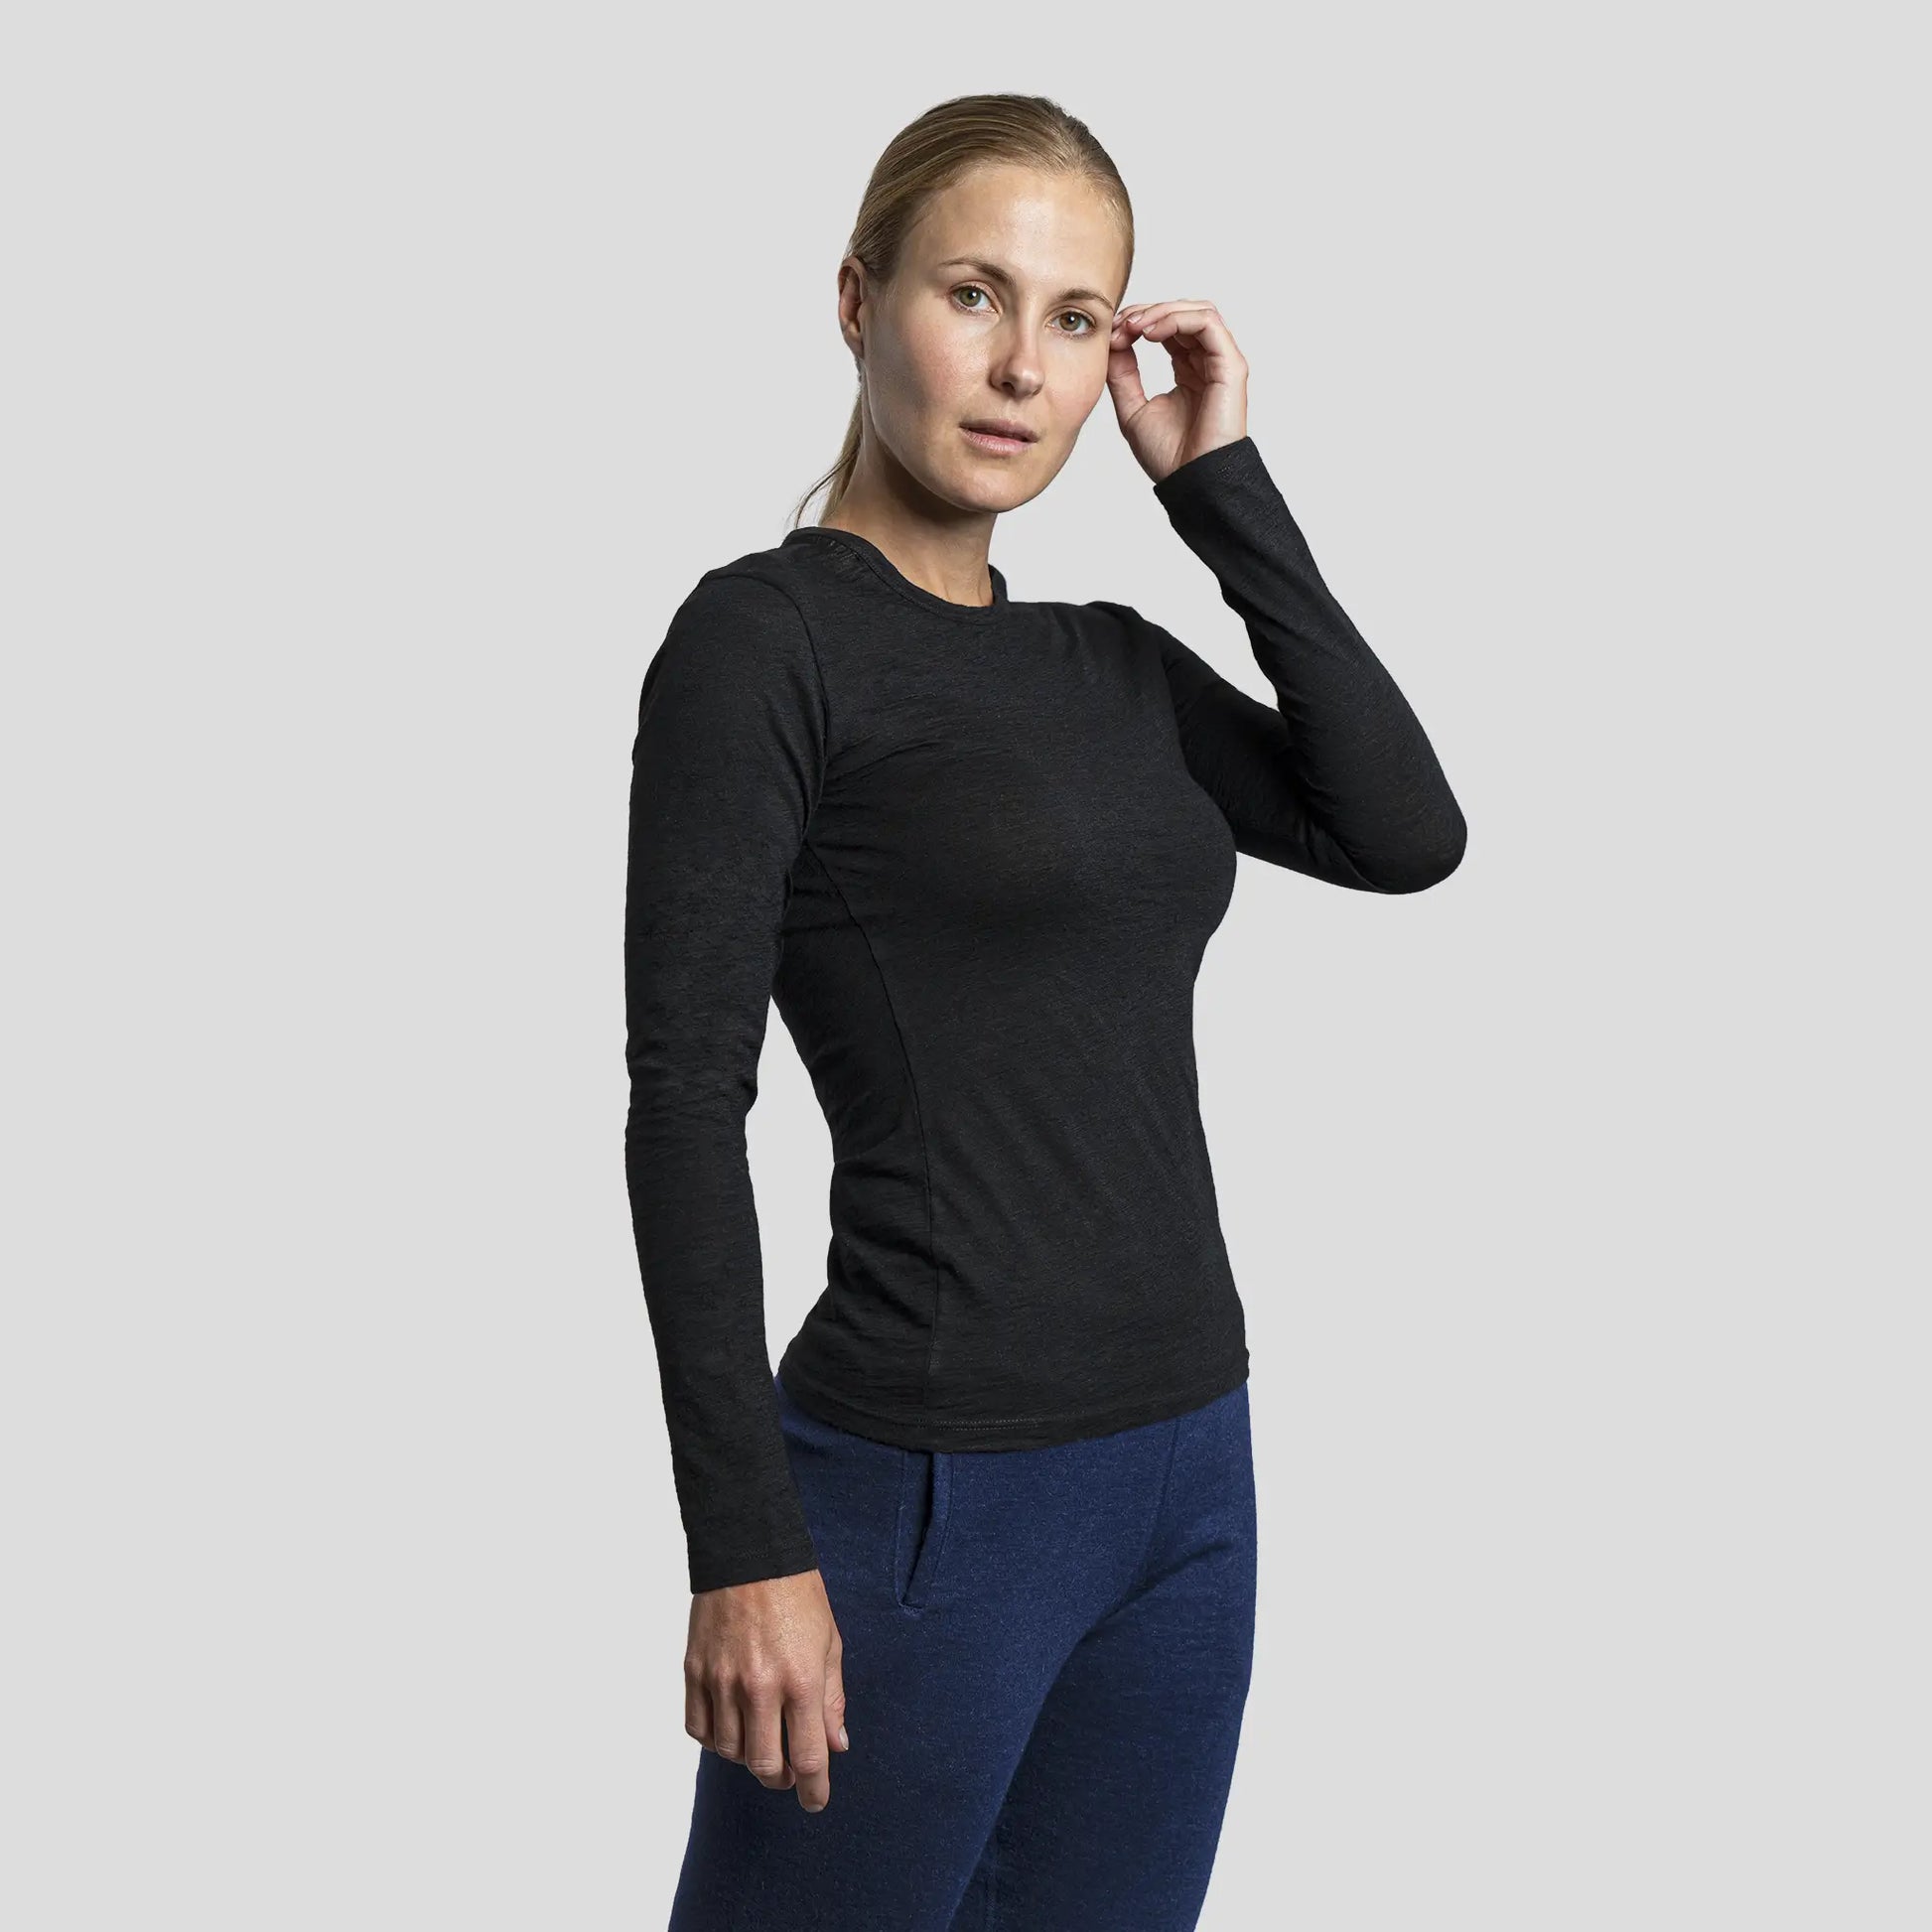 Women's Basic Long Sleeve Thermal Top Lightweight Mock Neck Shirts